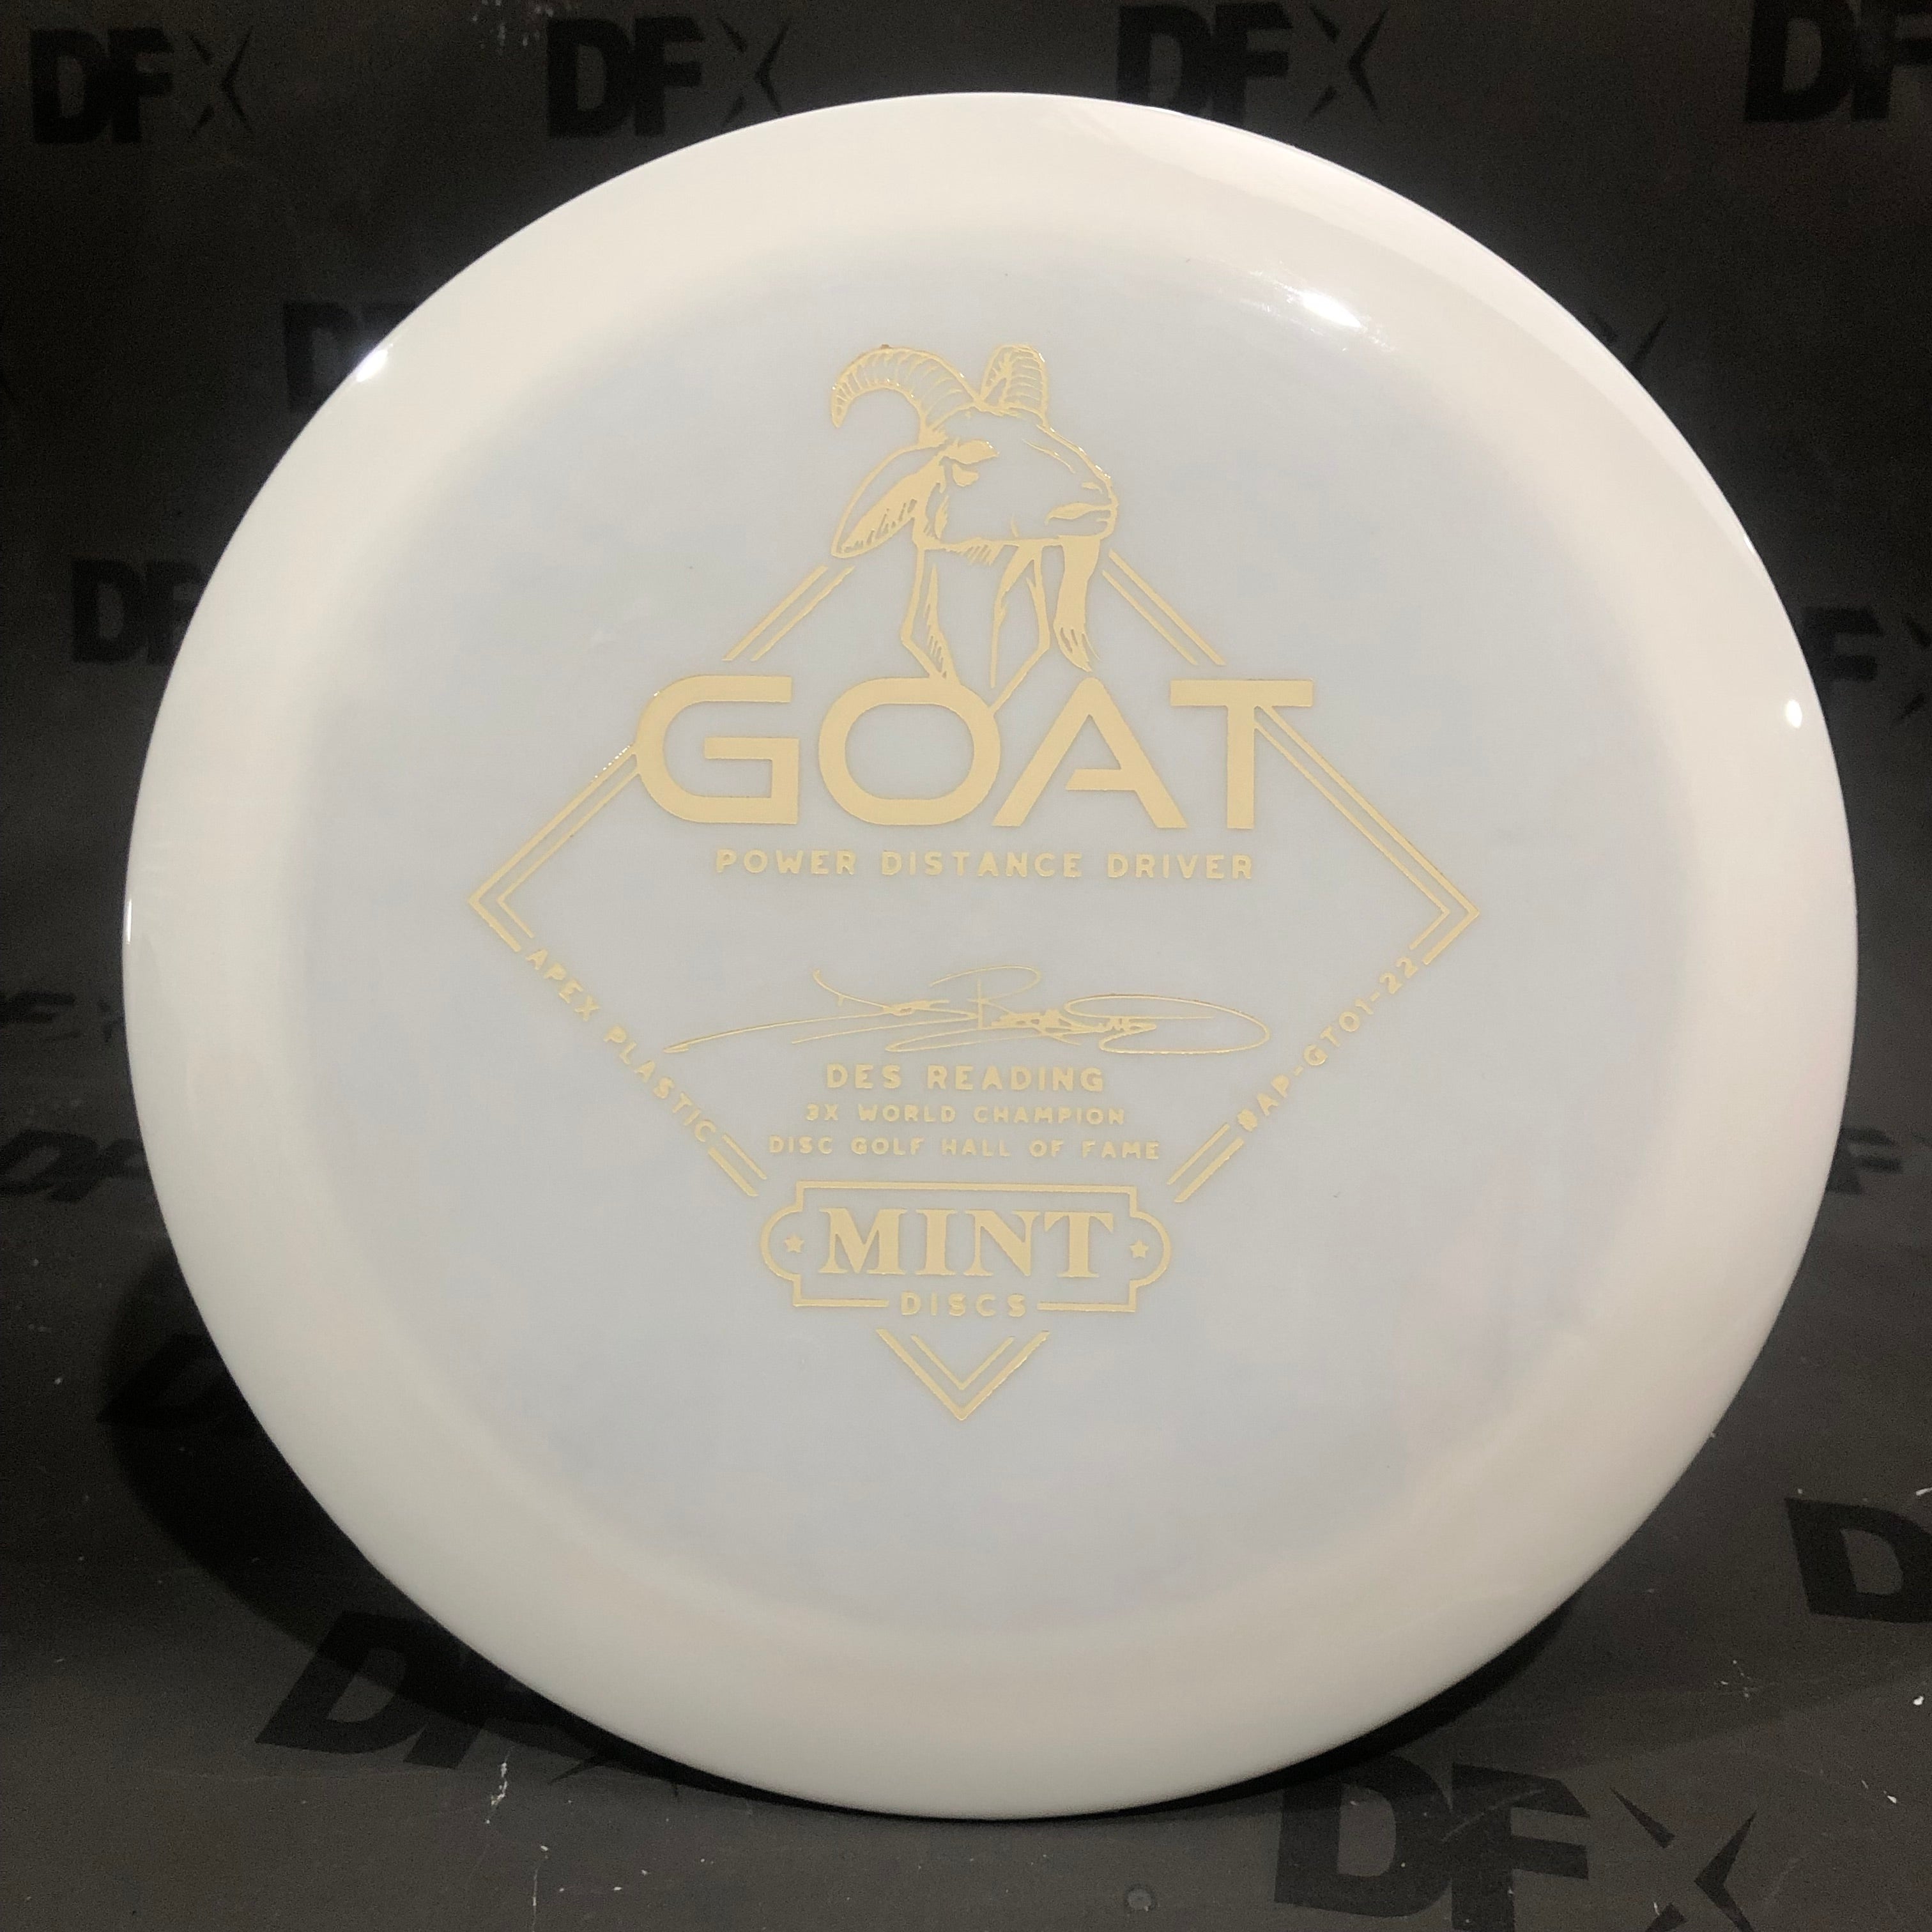 Mint Goat - Apex